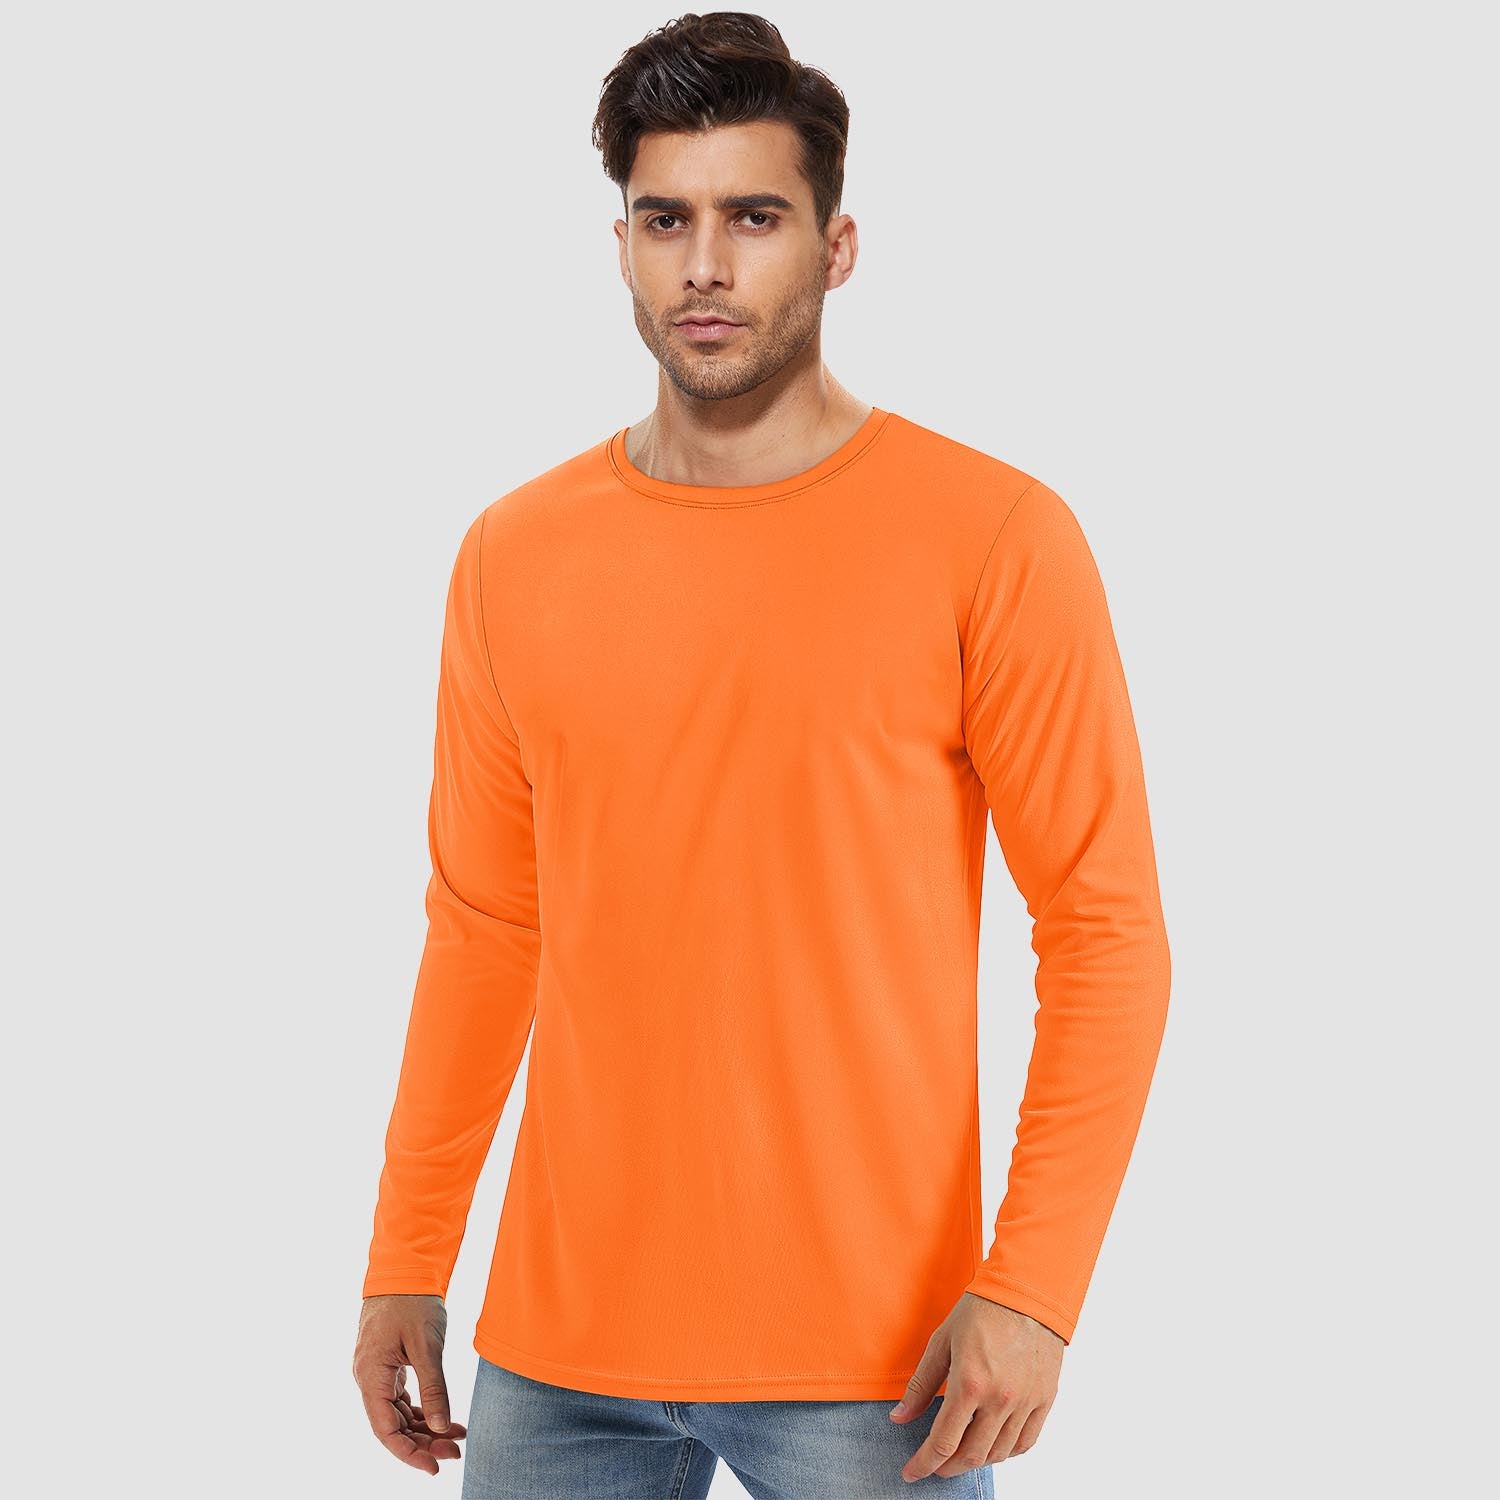 Men's UPF 80+ Long Sleeve Shirts UV Sun Protection Shirt Running